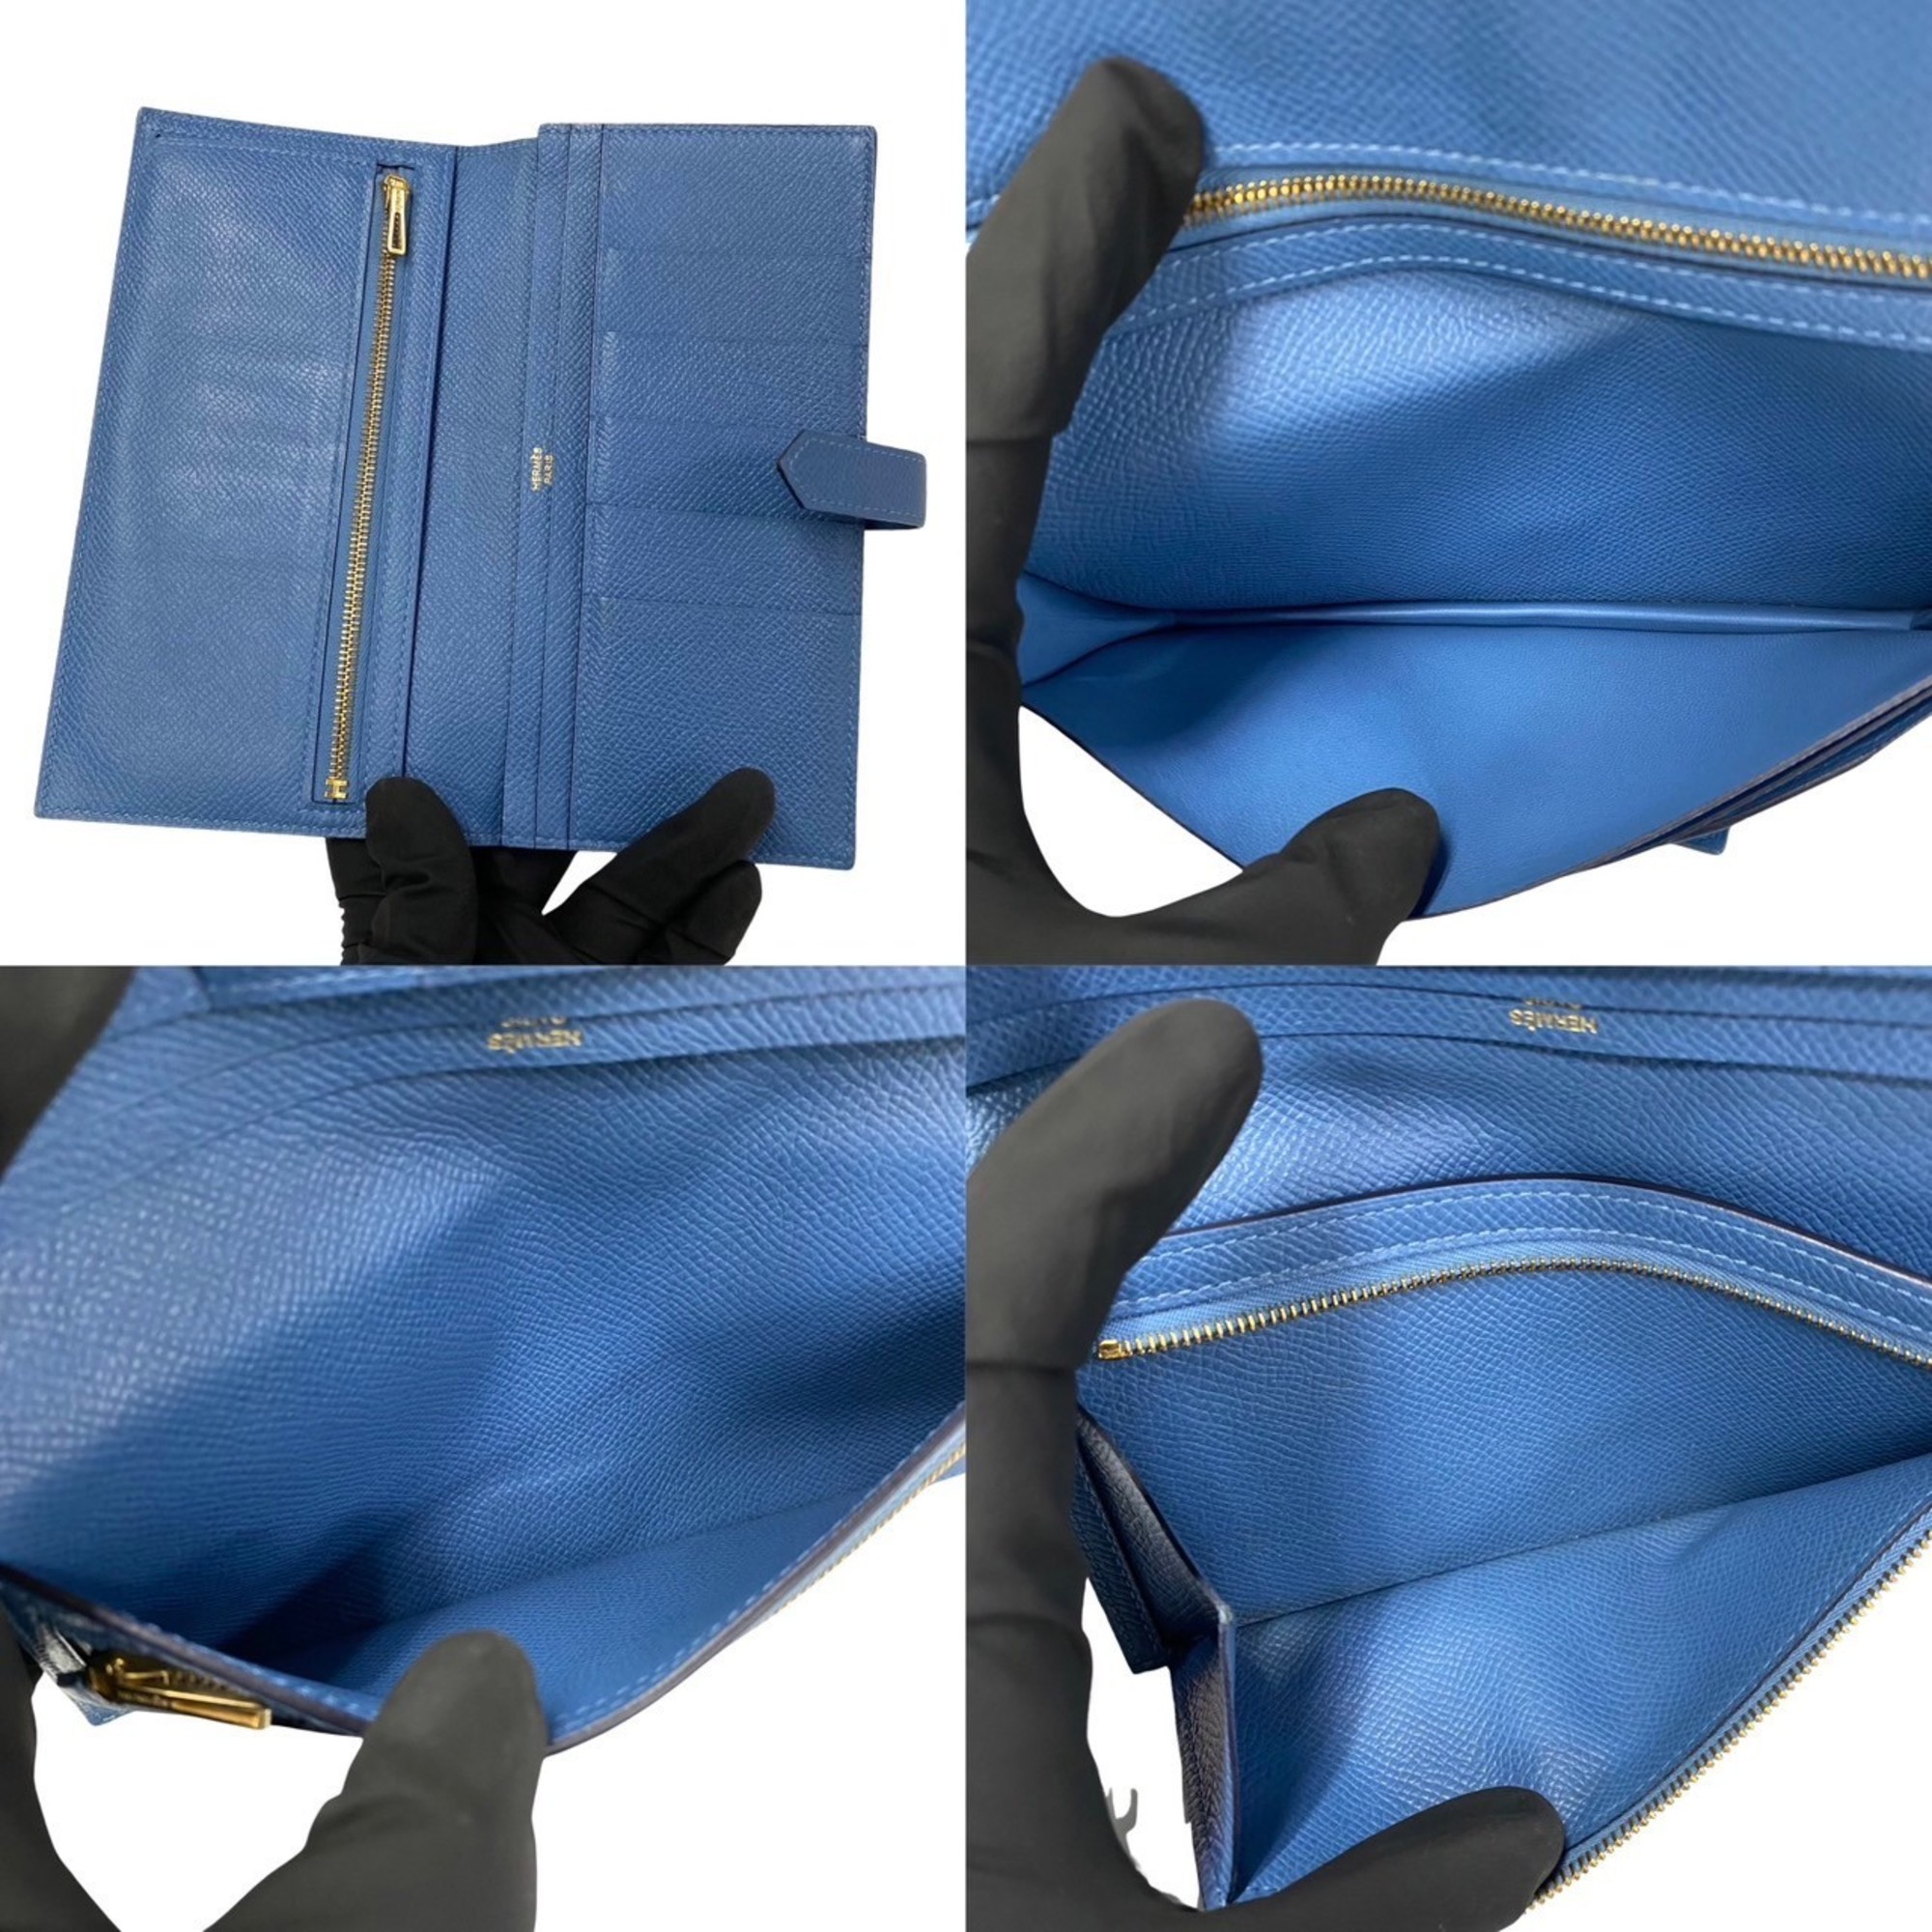 HERMES Beance Soufflé Metal Fittings Vaux Epson Leather Bifold Long Wallet Blue 201-6